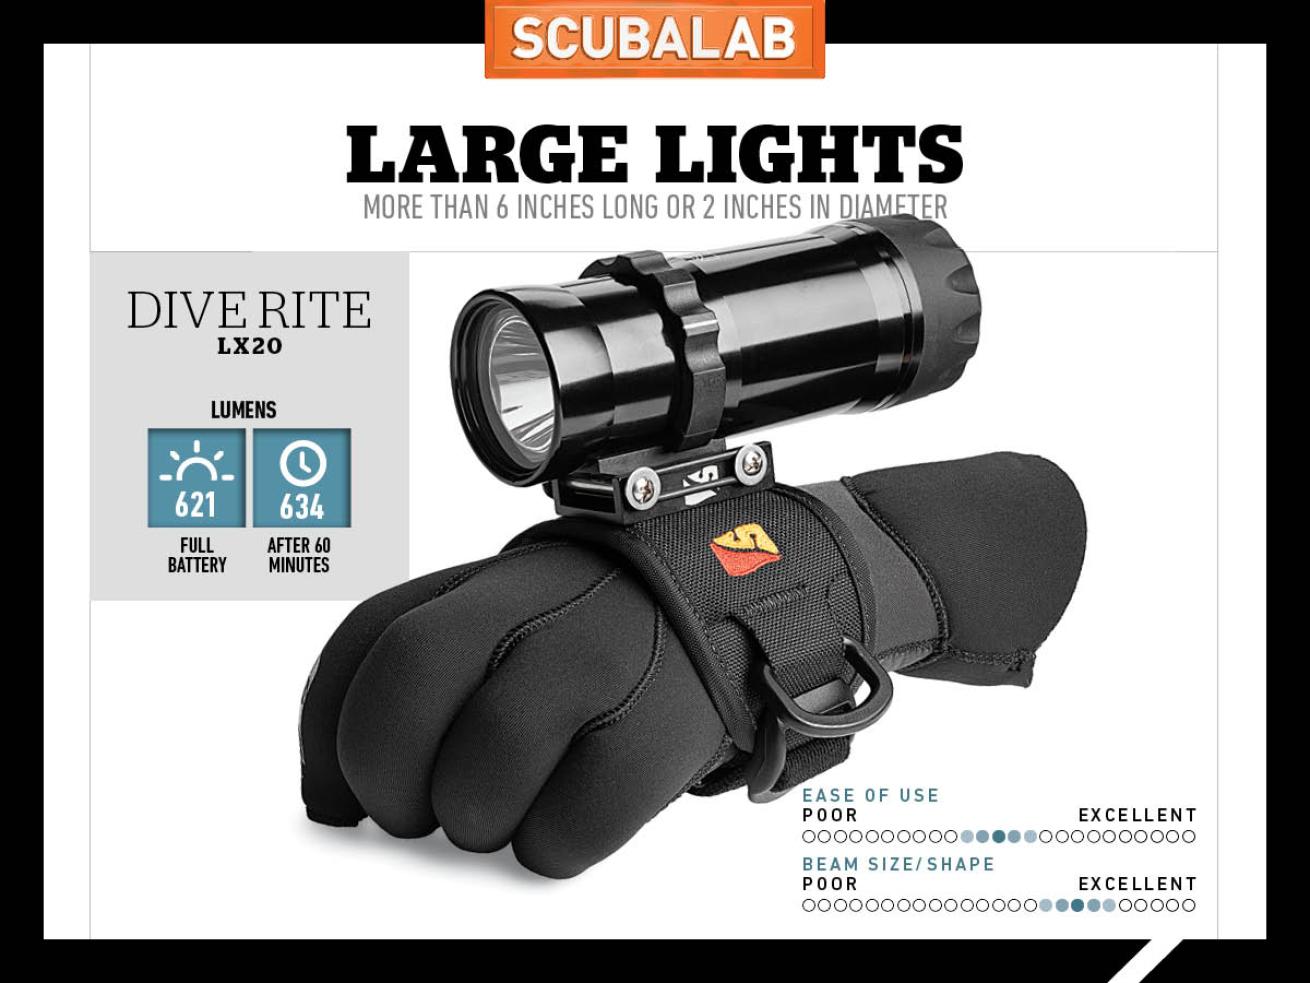 Scuba Diving Light Dive Rite LX20 Reviewed by ScubaLab